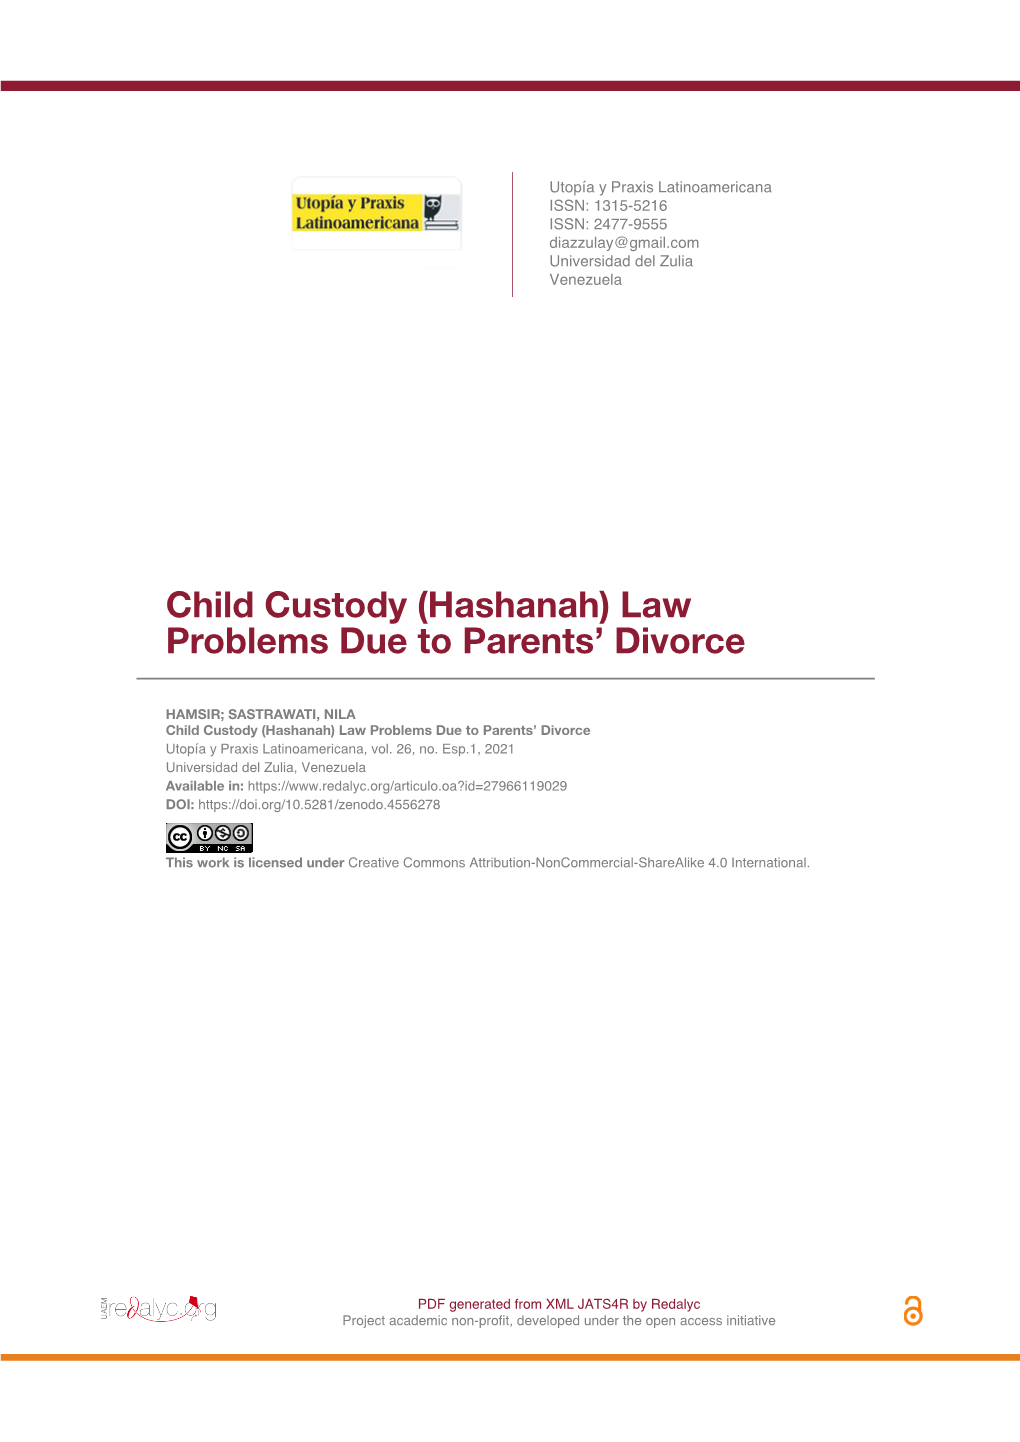 Child Custody (Hashanah) Law Problems Due to Parents’ Divorce